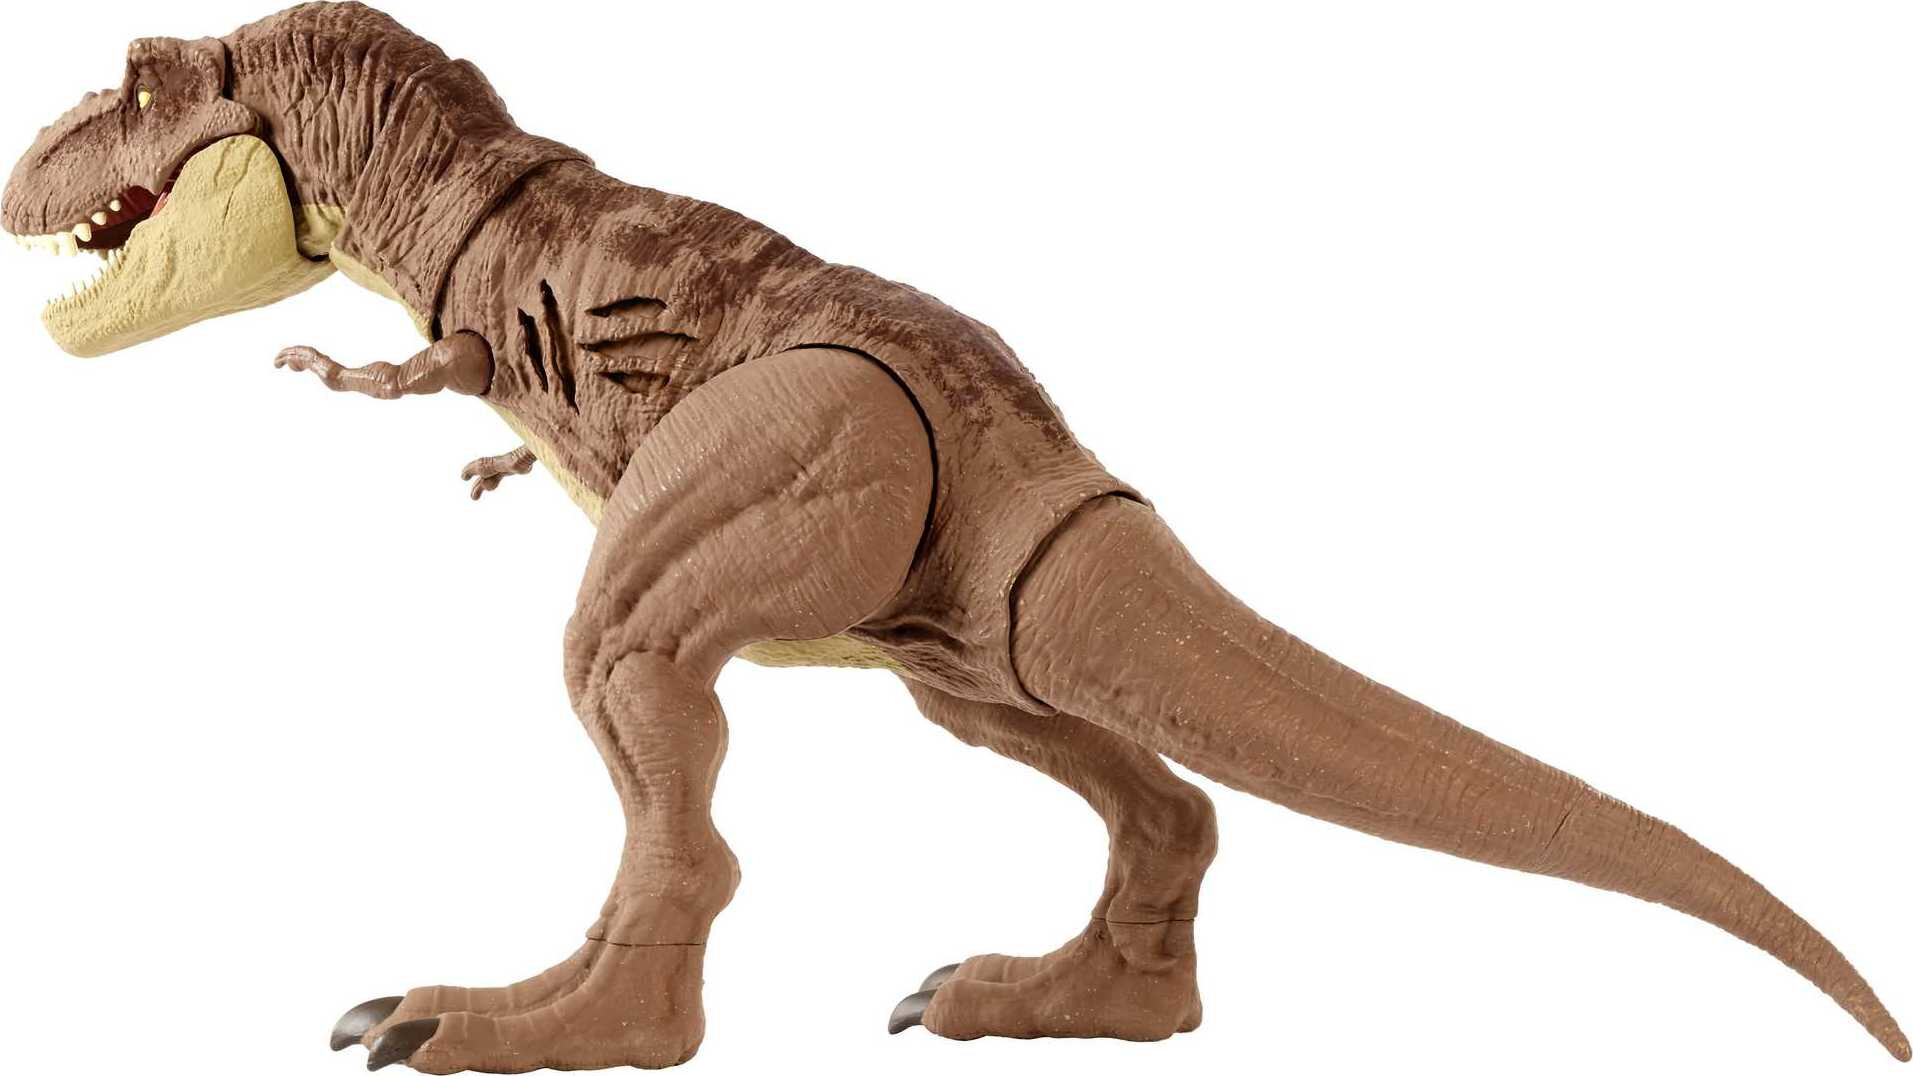 Jurassic World Extreme Damage Tyrannosaurus Rex Action Figure, Transforming Dinosaur Toy with Motion - image 5 of 6